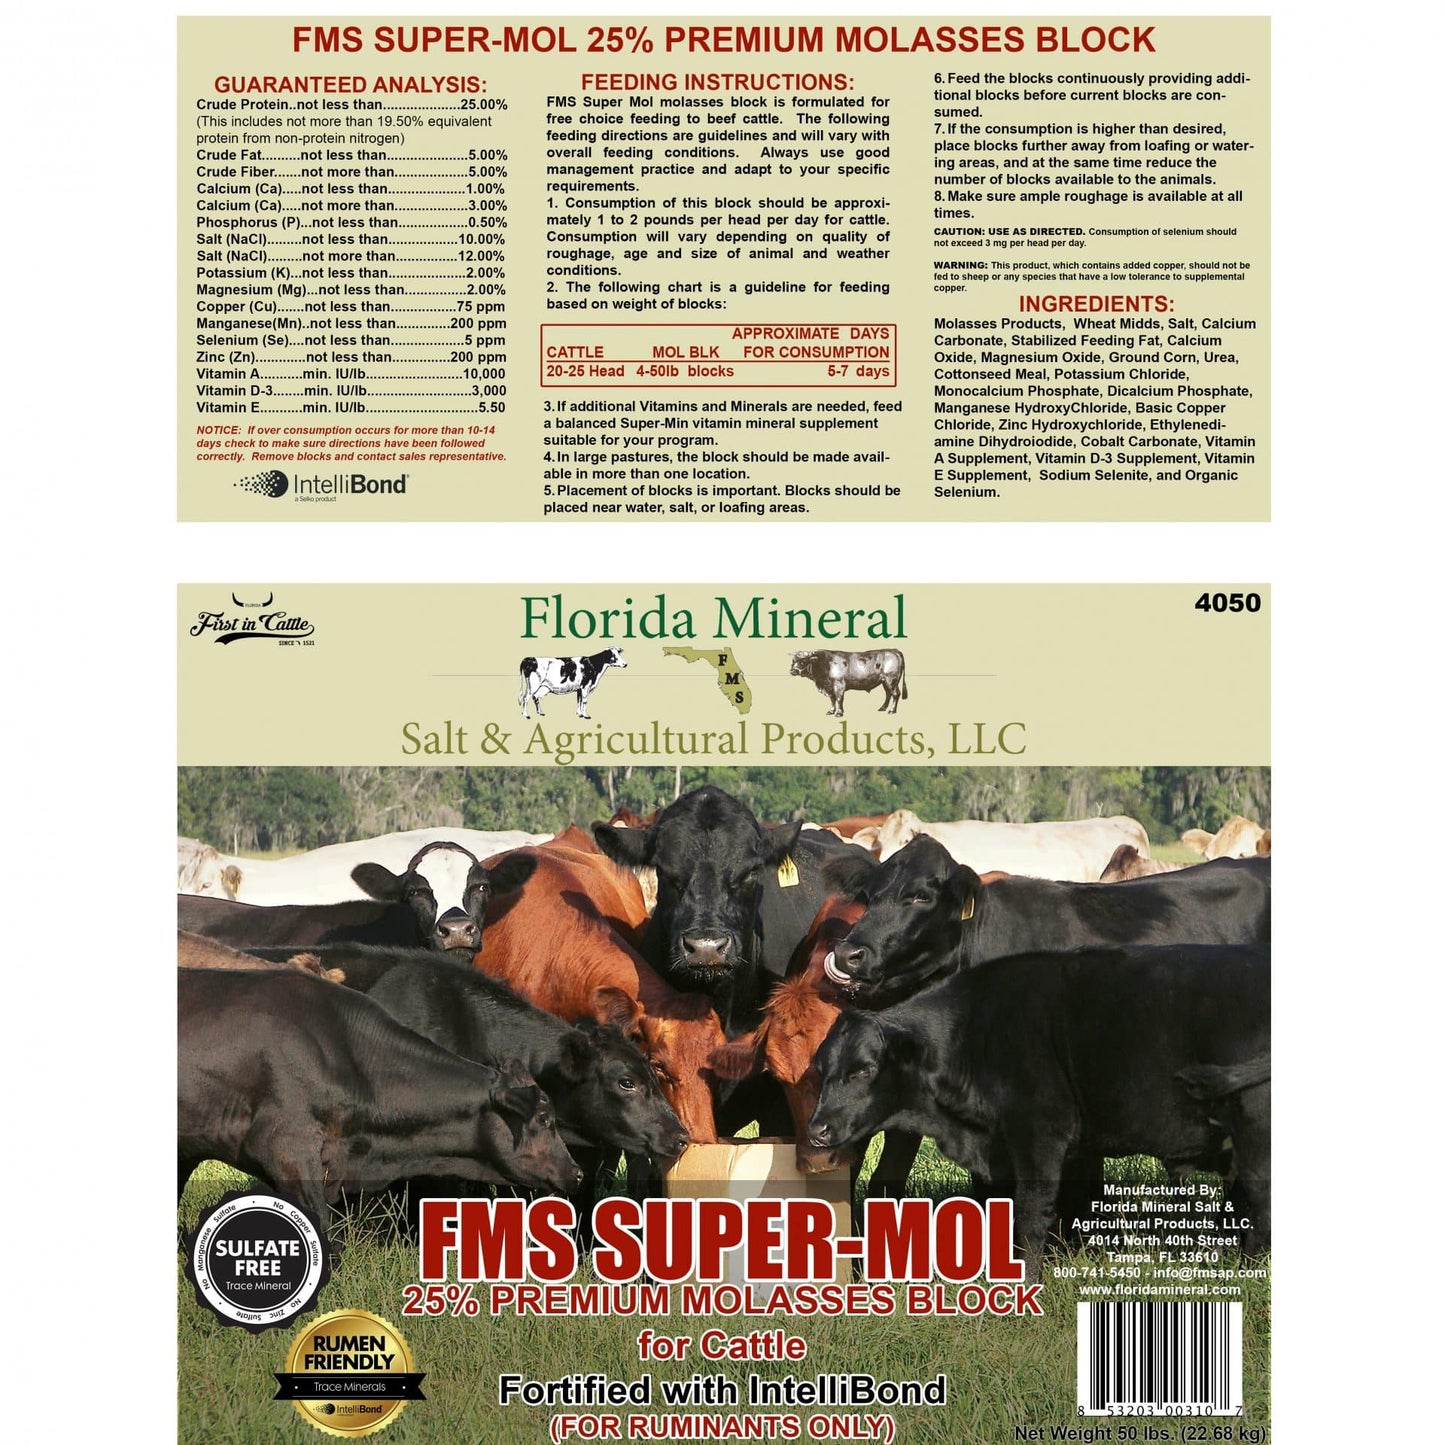 Super-Mol 25% Premium Molasses for Cattle (50lb Block)